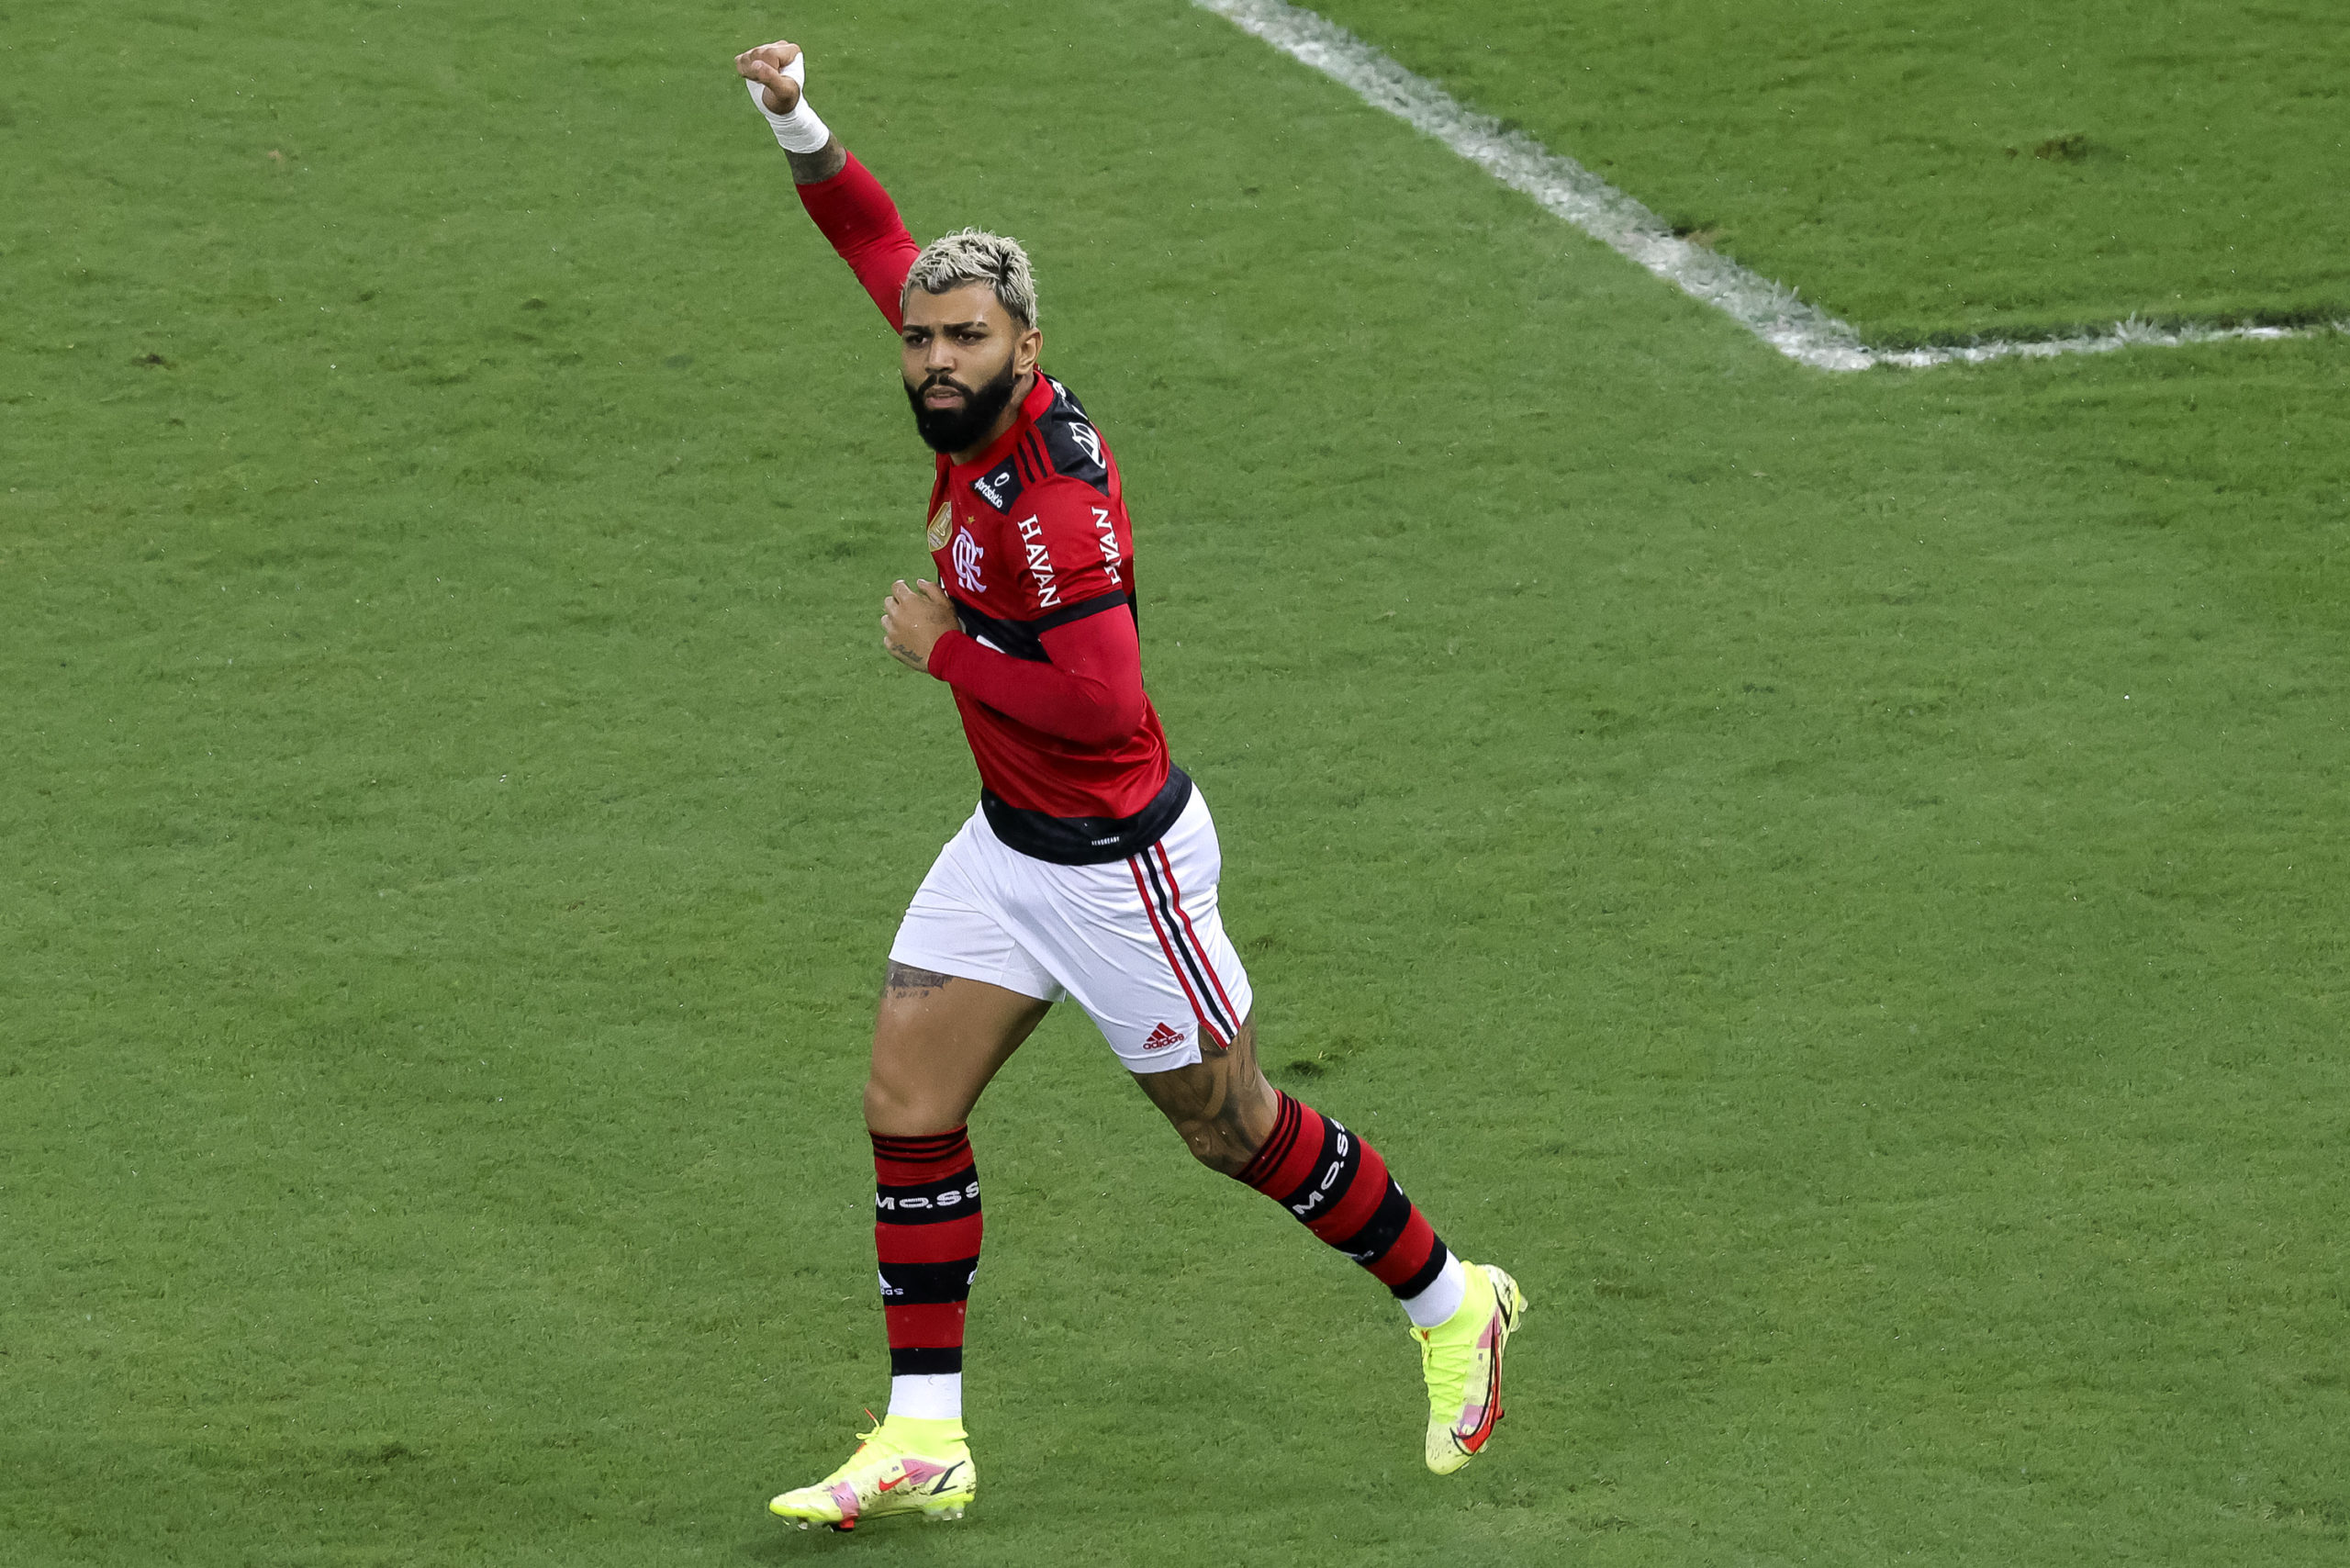 Gabriel Barbosa of Flamengo celebrates after scoring a goal